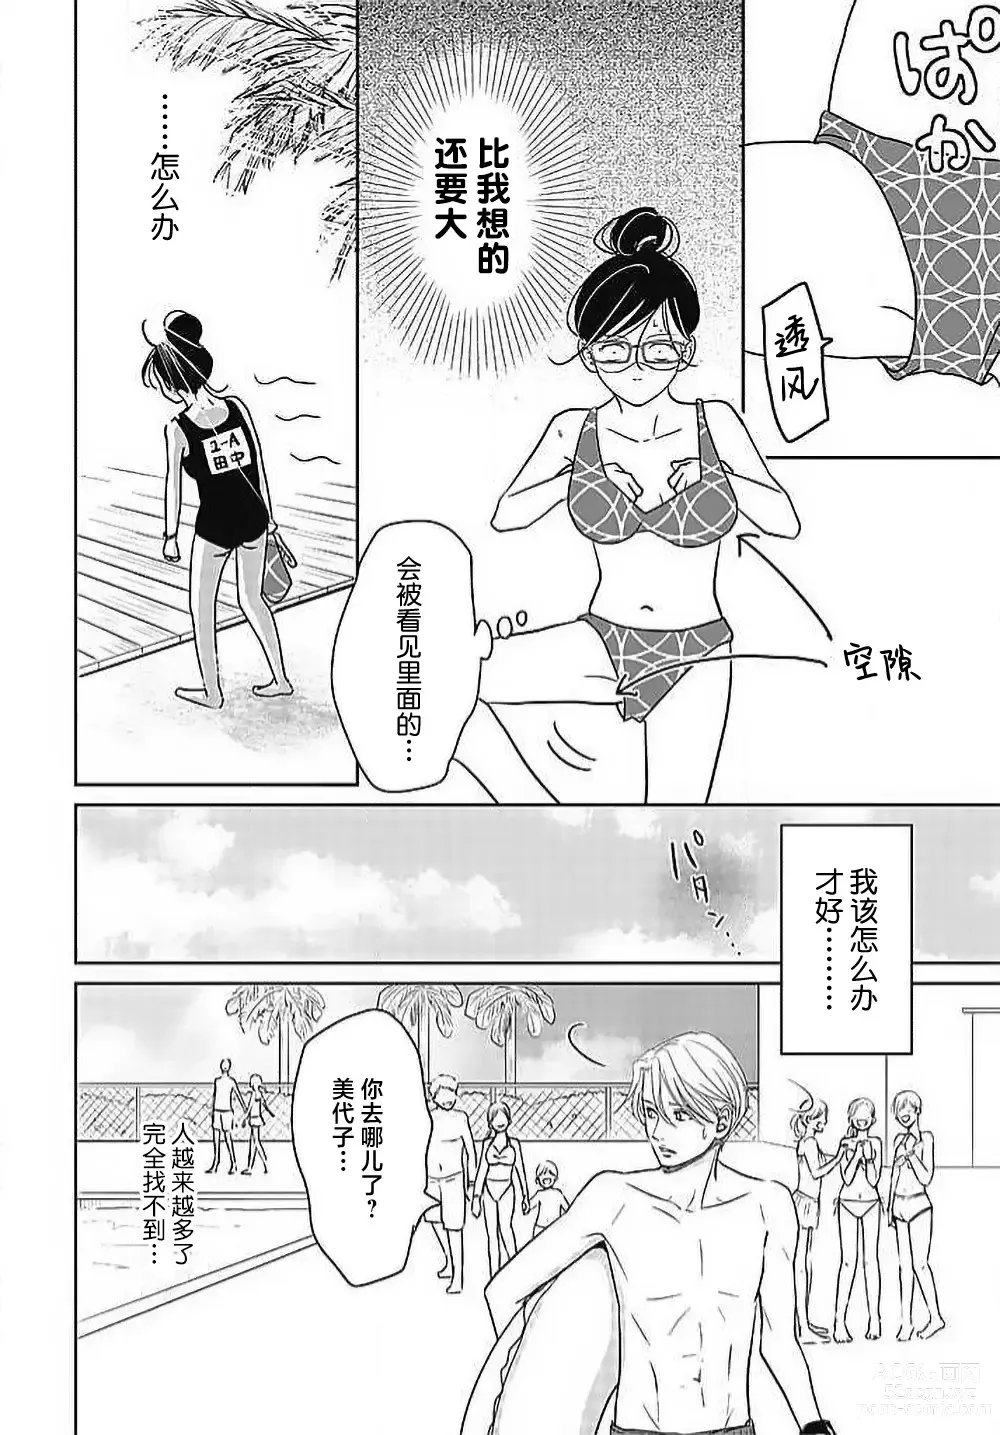 Page 177 of manga 今夜、于保健室甜蜜融化 1-5